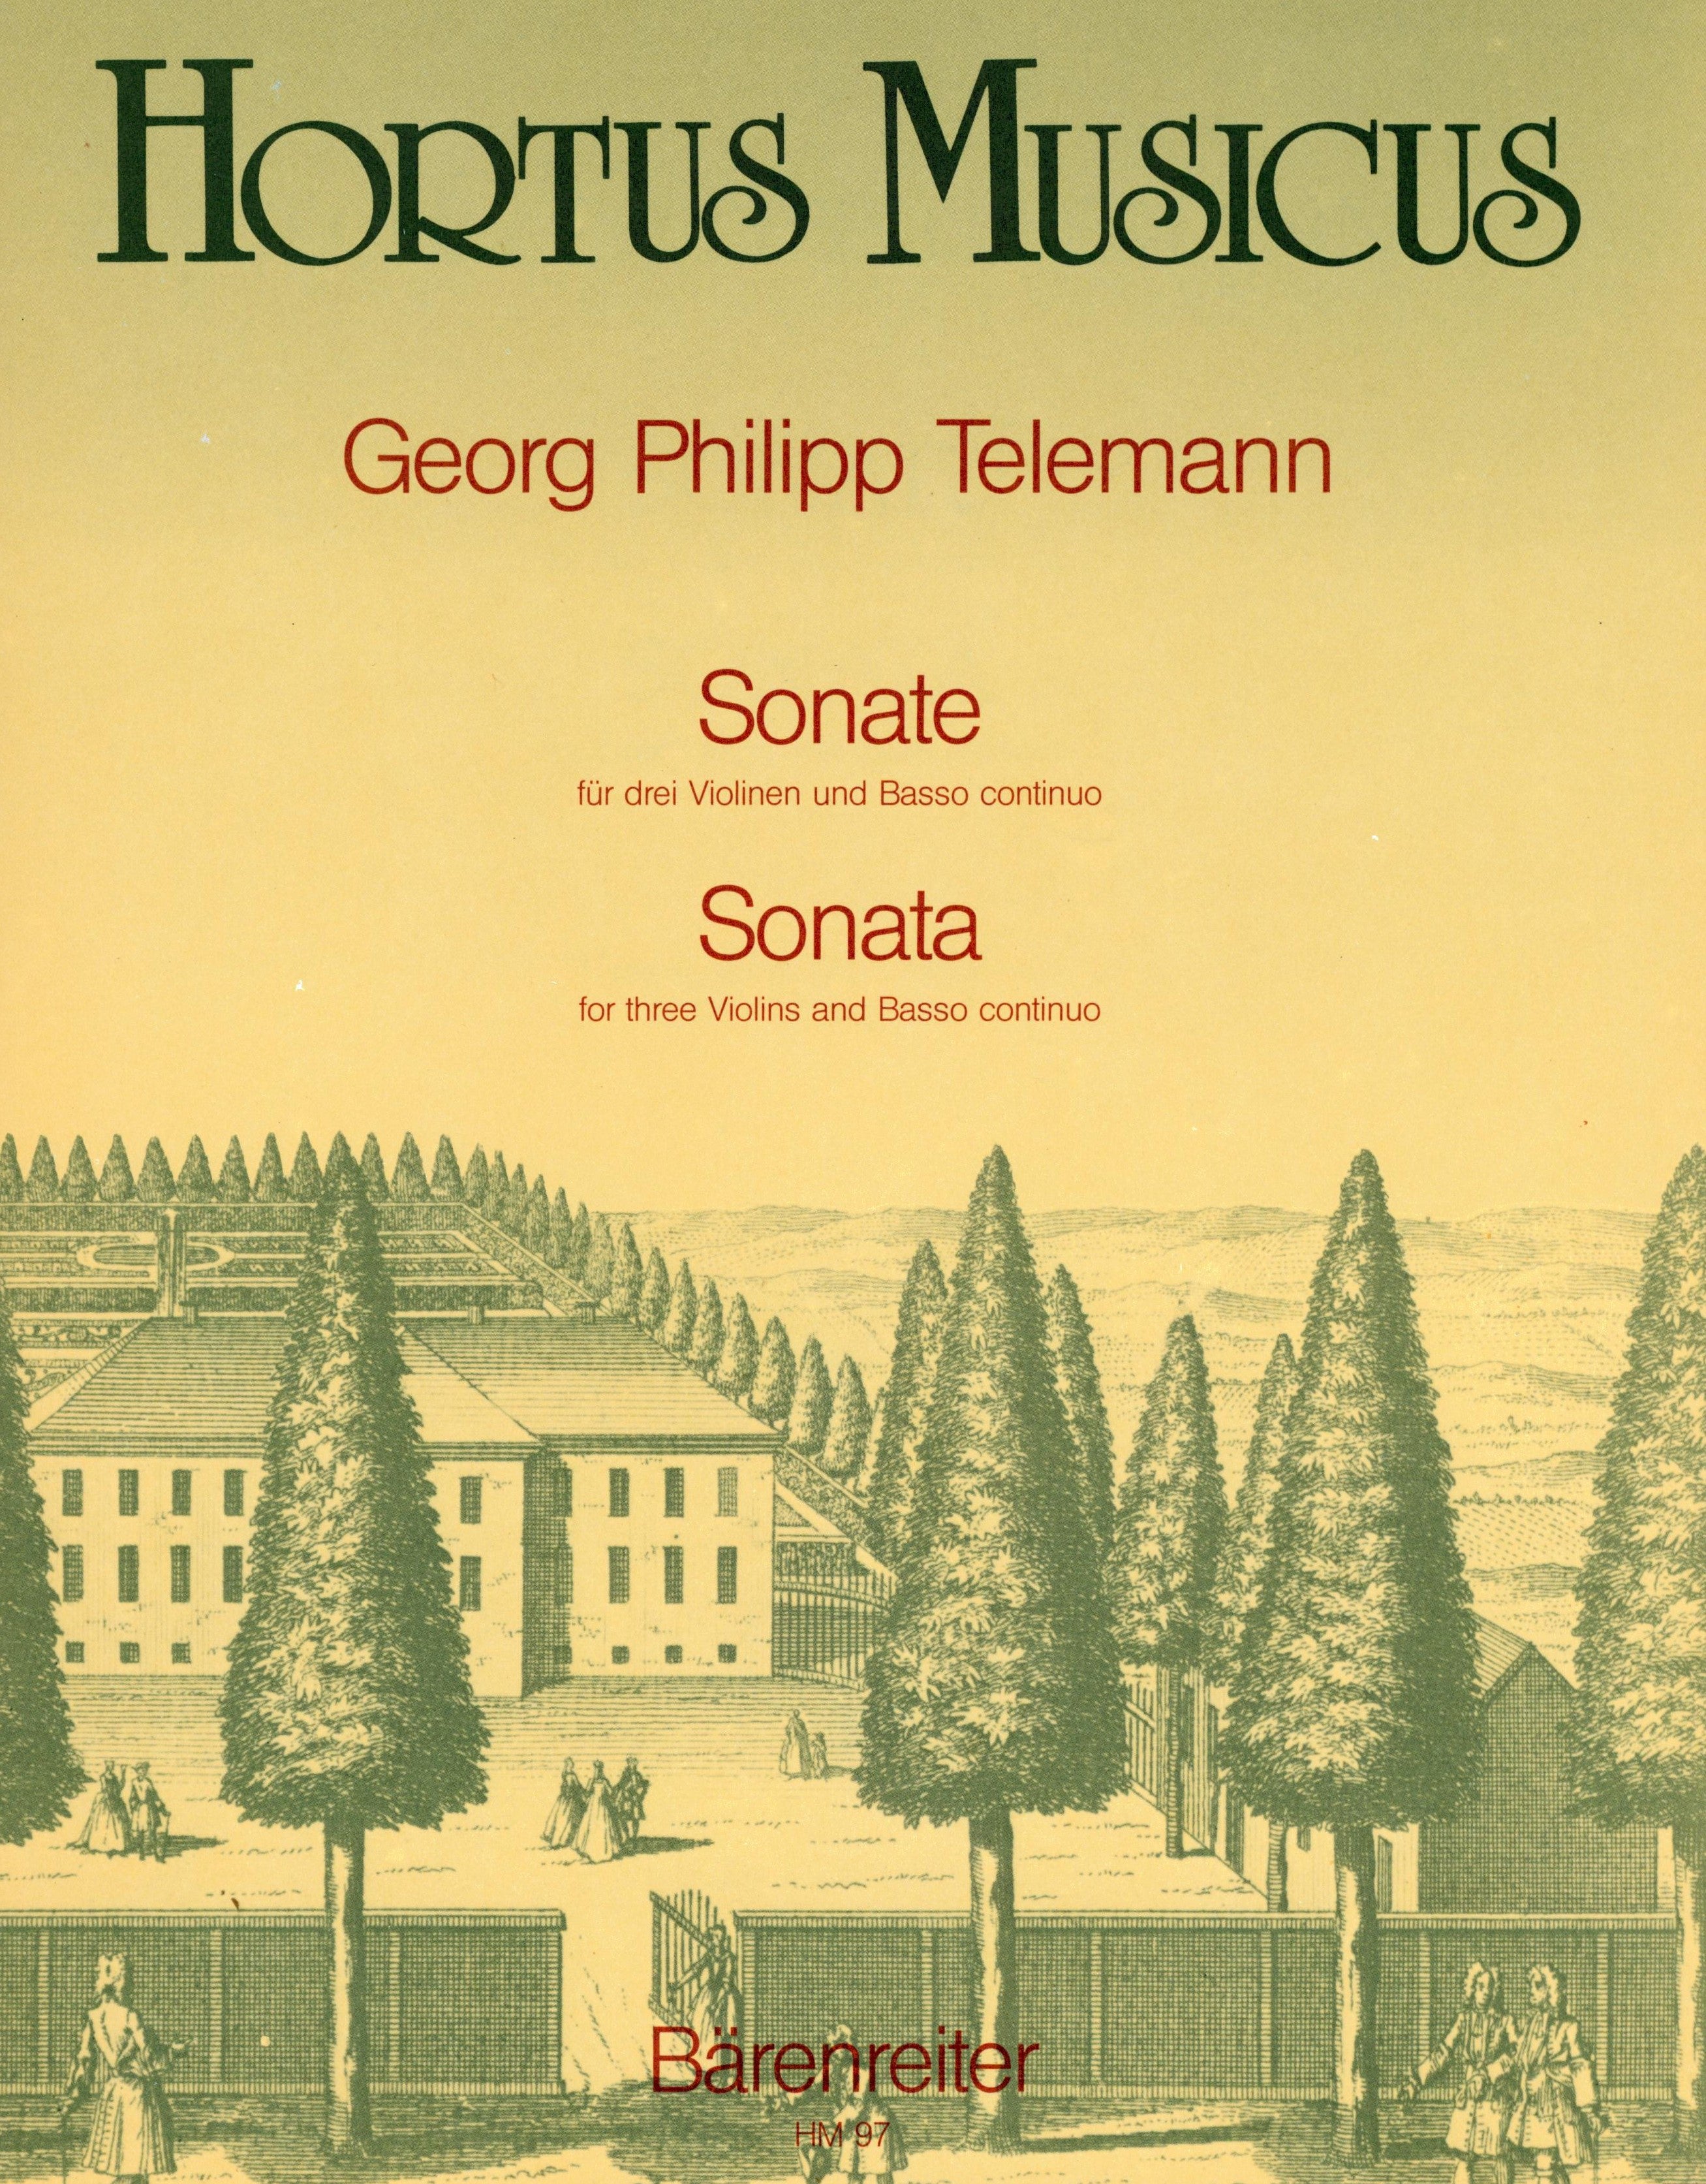 Telemann: Sonata for Three Violins and Basso continuo in B Major